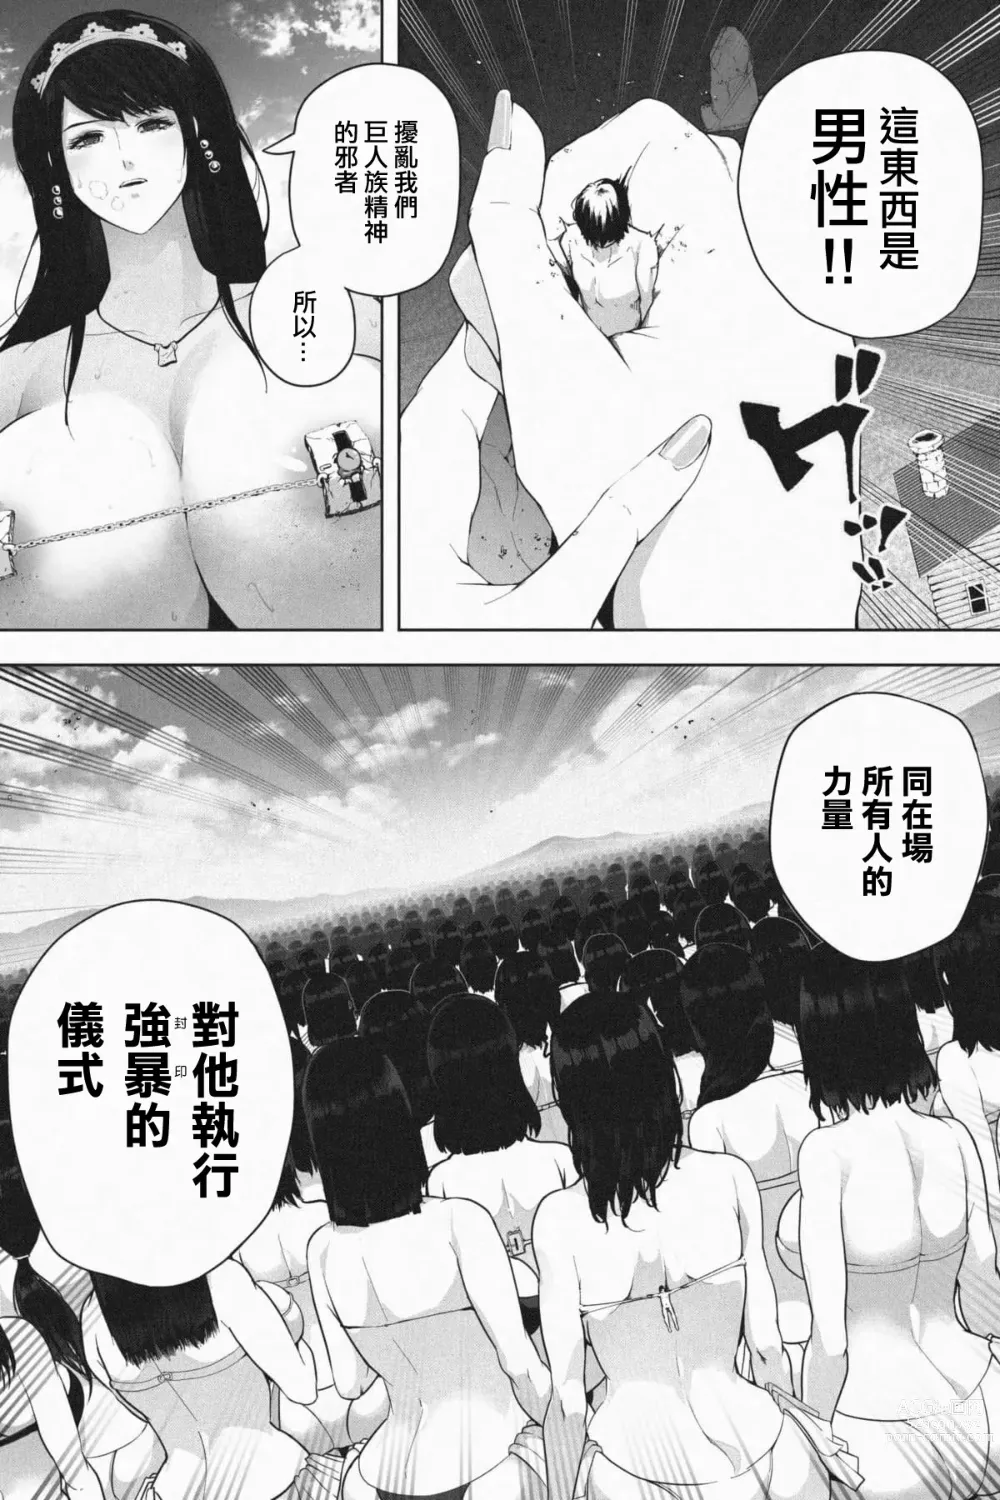 Page 22 of doujinshi 歡迎來到巨人島